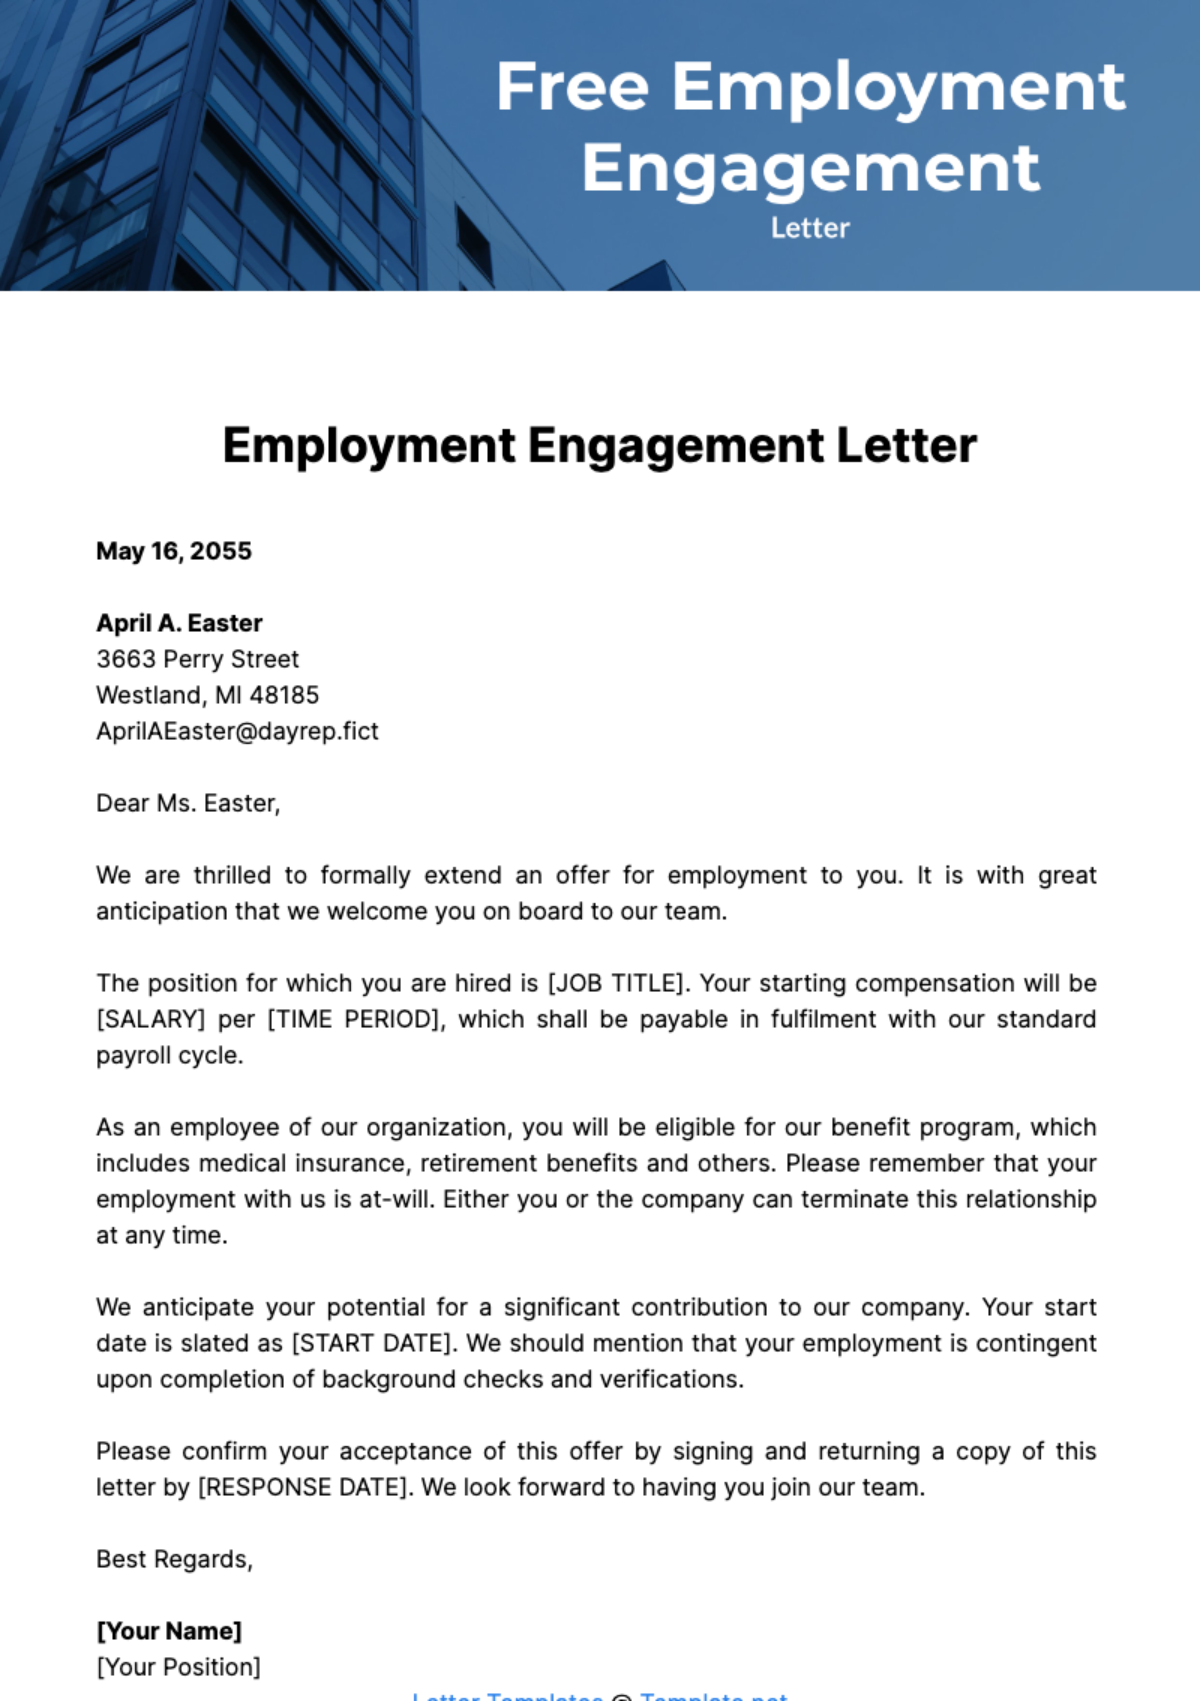 Employment Engagement Letter Template